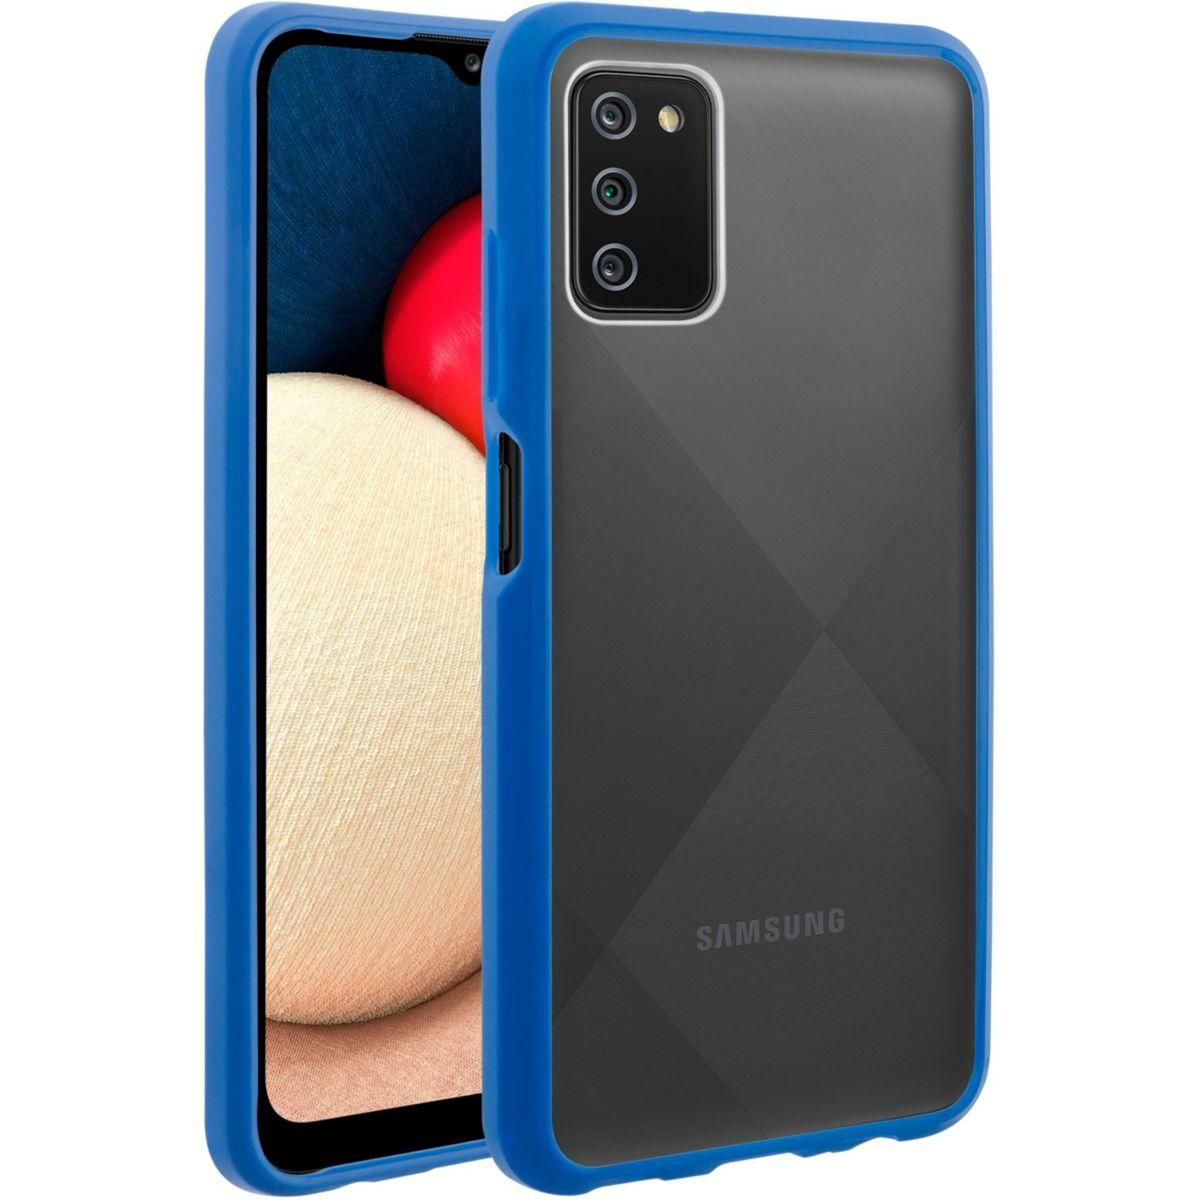 ESSENTIEL B Coque Samsung A03s bleu